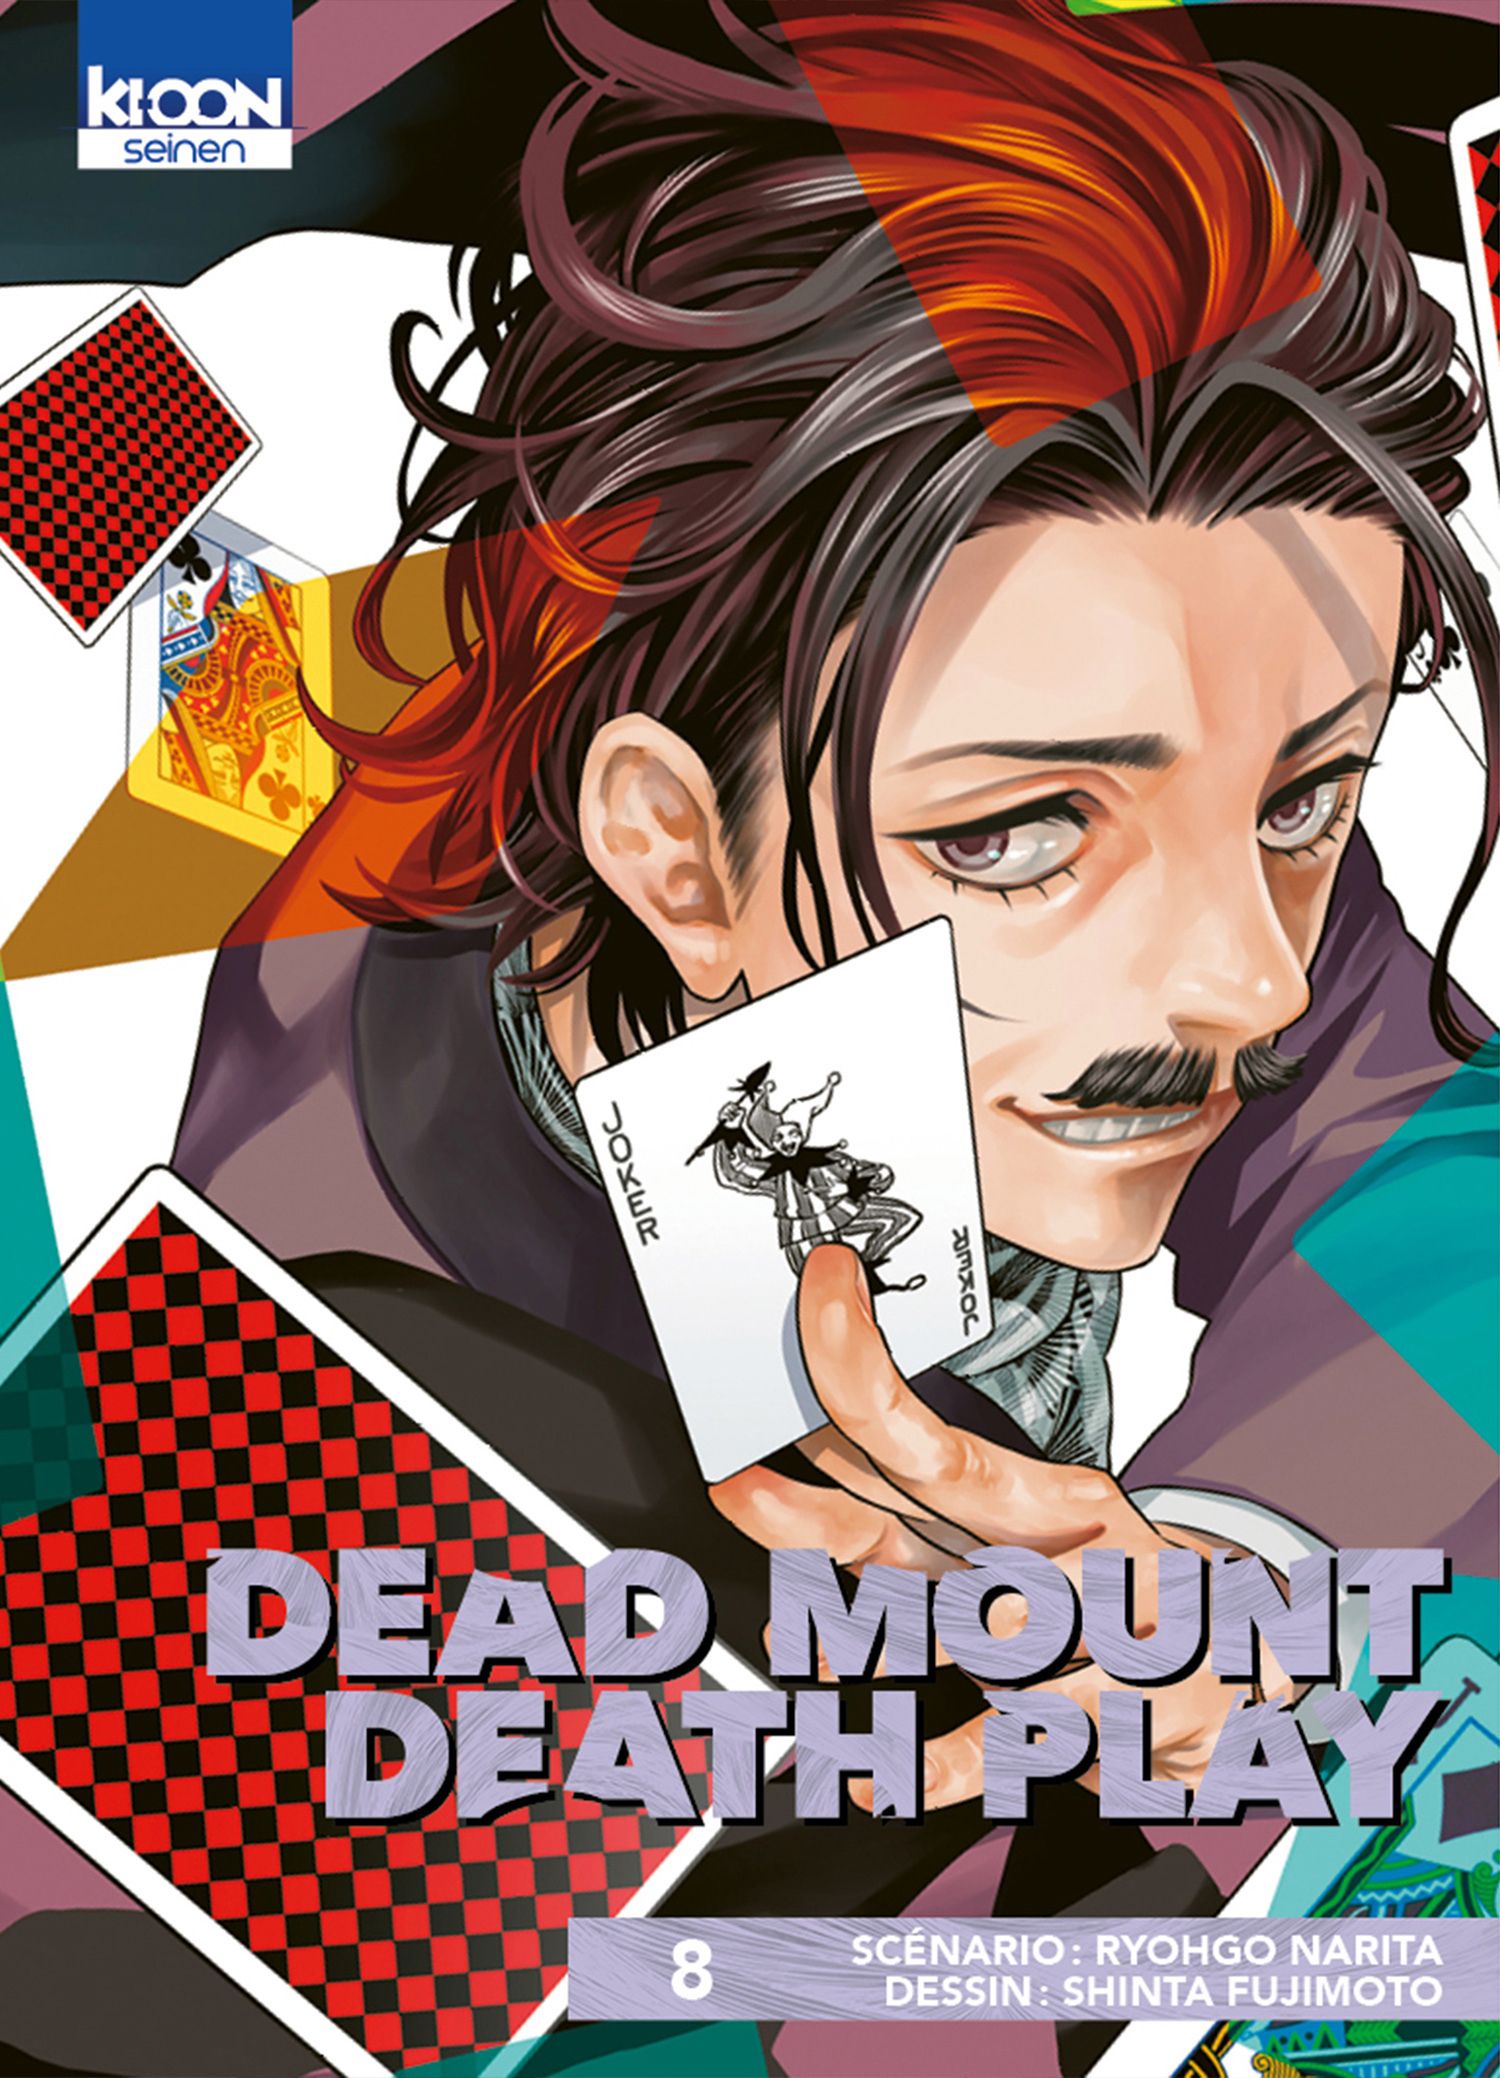 Dead Mount Death Play Vol. 2 Review